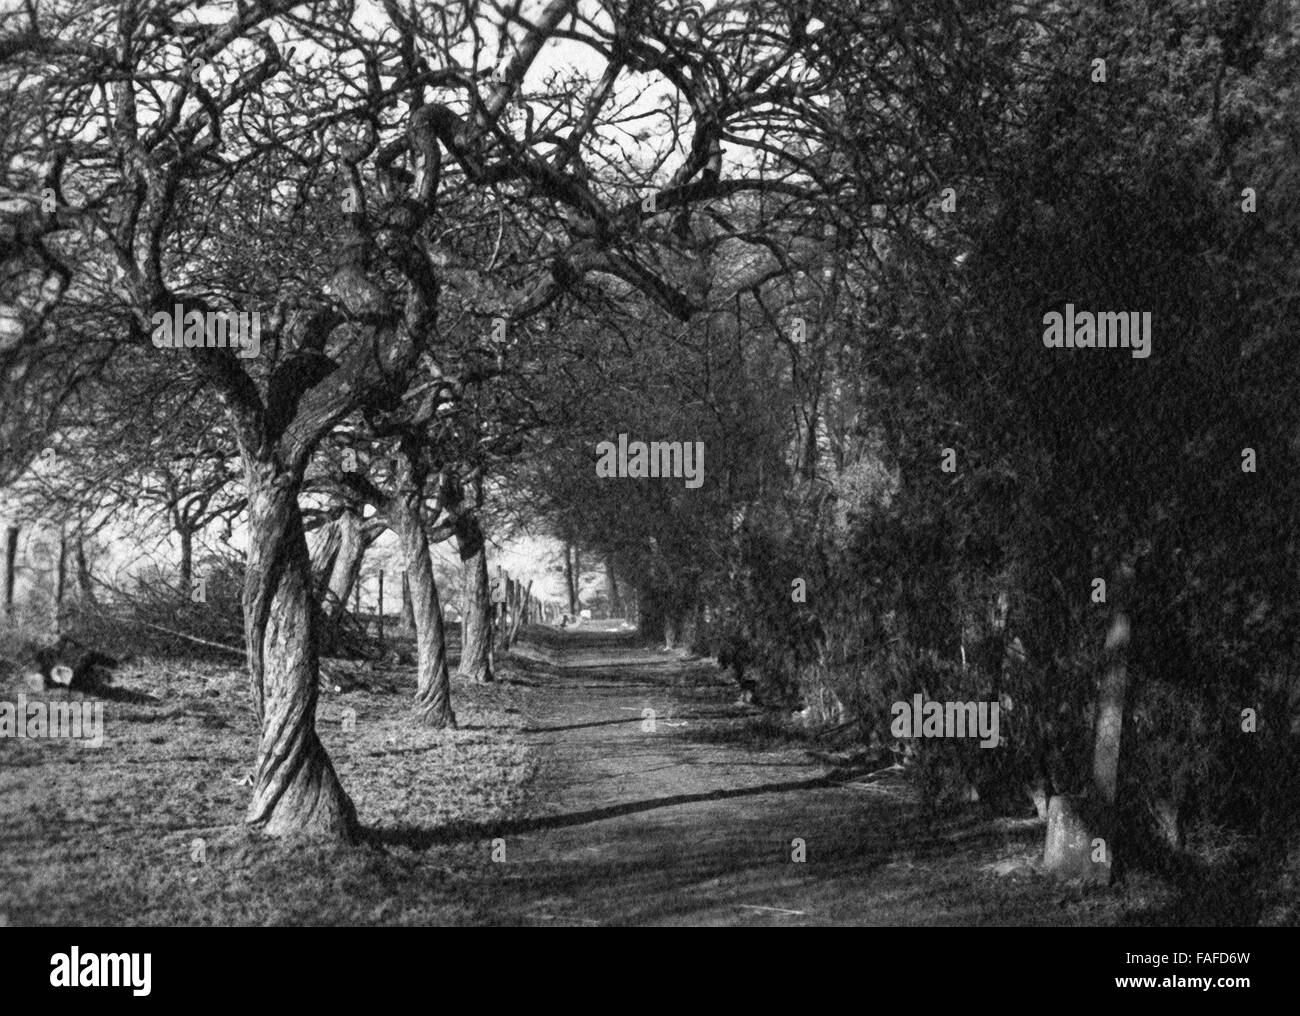 Bäume im Garten Haus bei Köln en Herl Holweide, Deutschland 1910er Jahre. Les arbres dans les jardins de l'hôtel Haus à Cologne Holweide Herl, Allemagne 1910. Banque D'Images